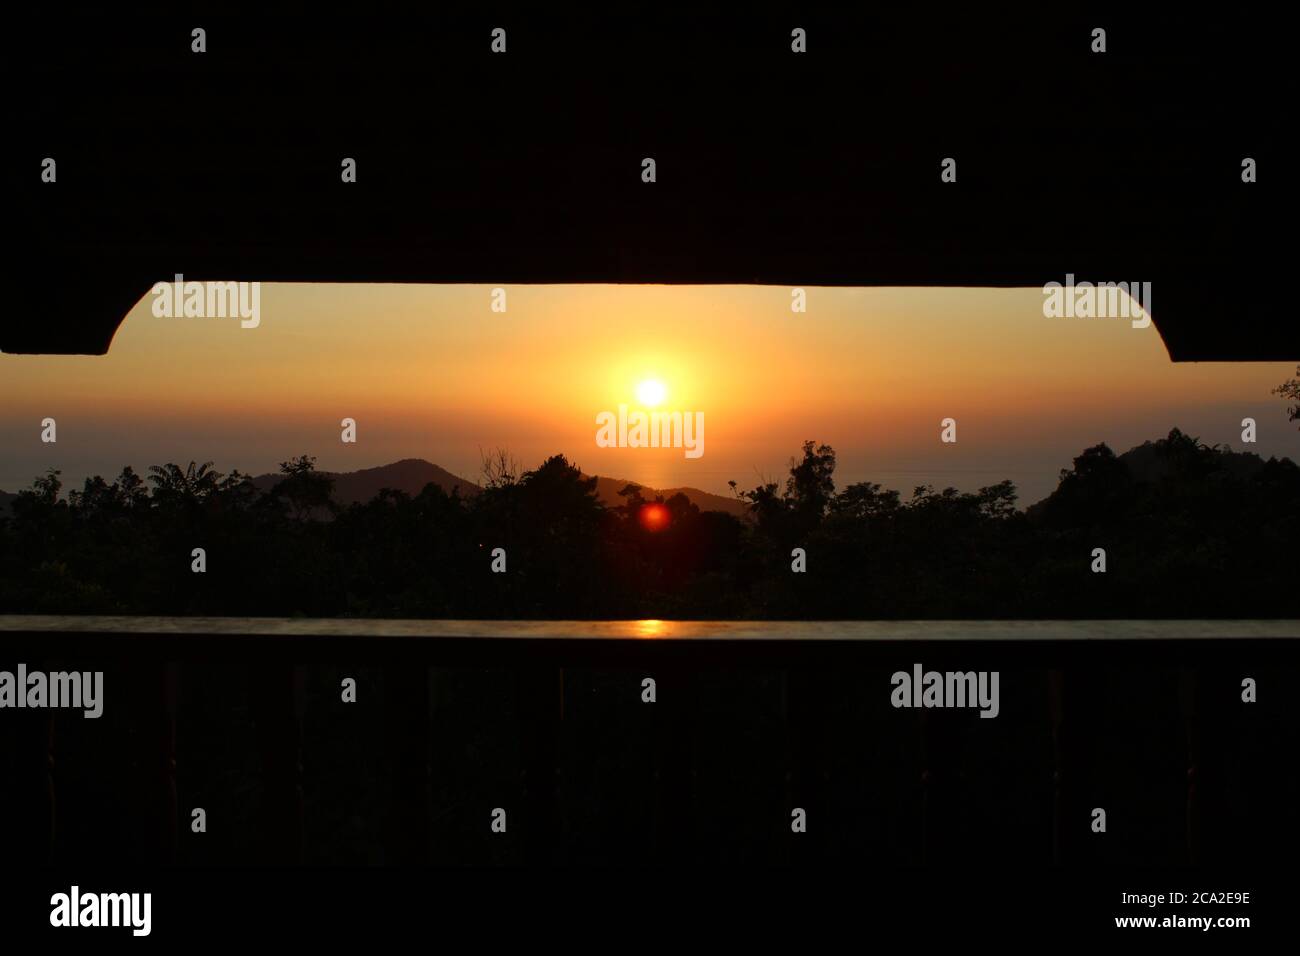 Fotos des Sonnenuntergangs an verschiedenen Orten. Stockfoto